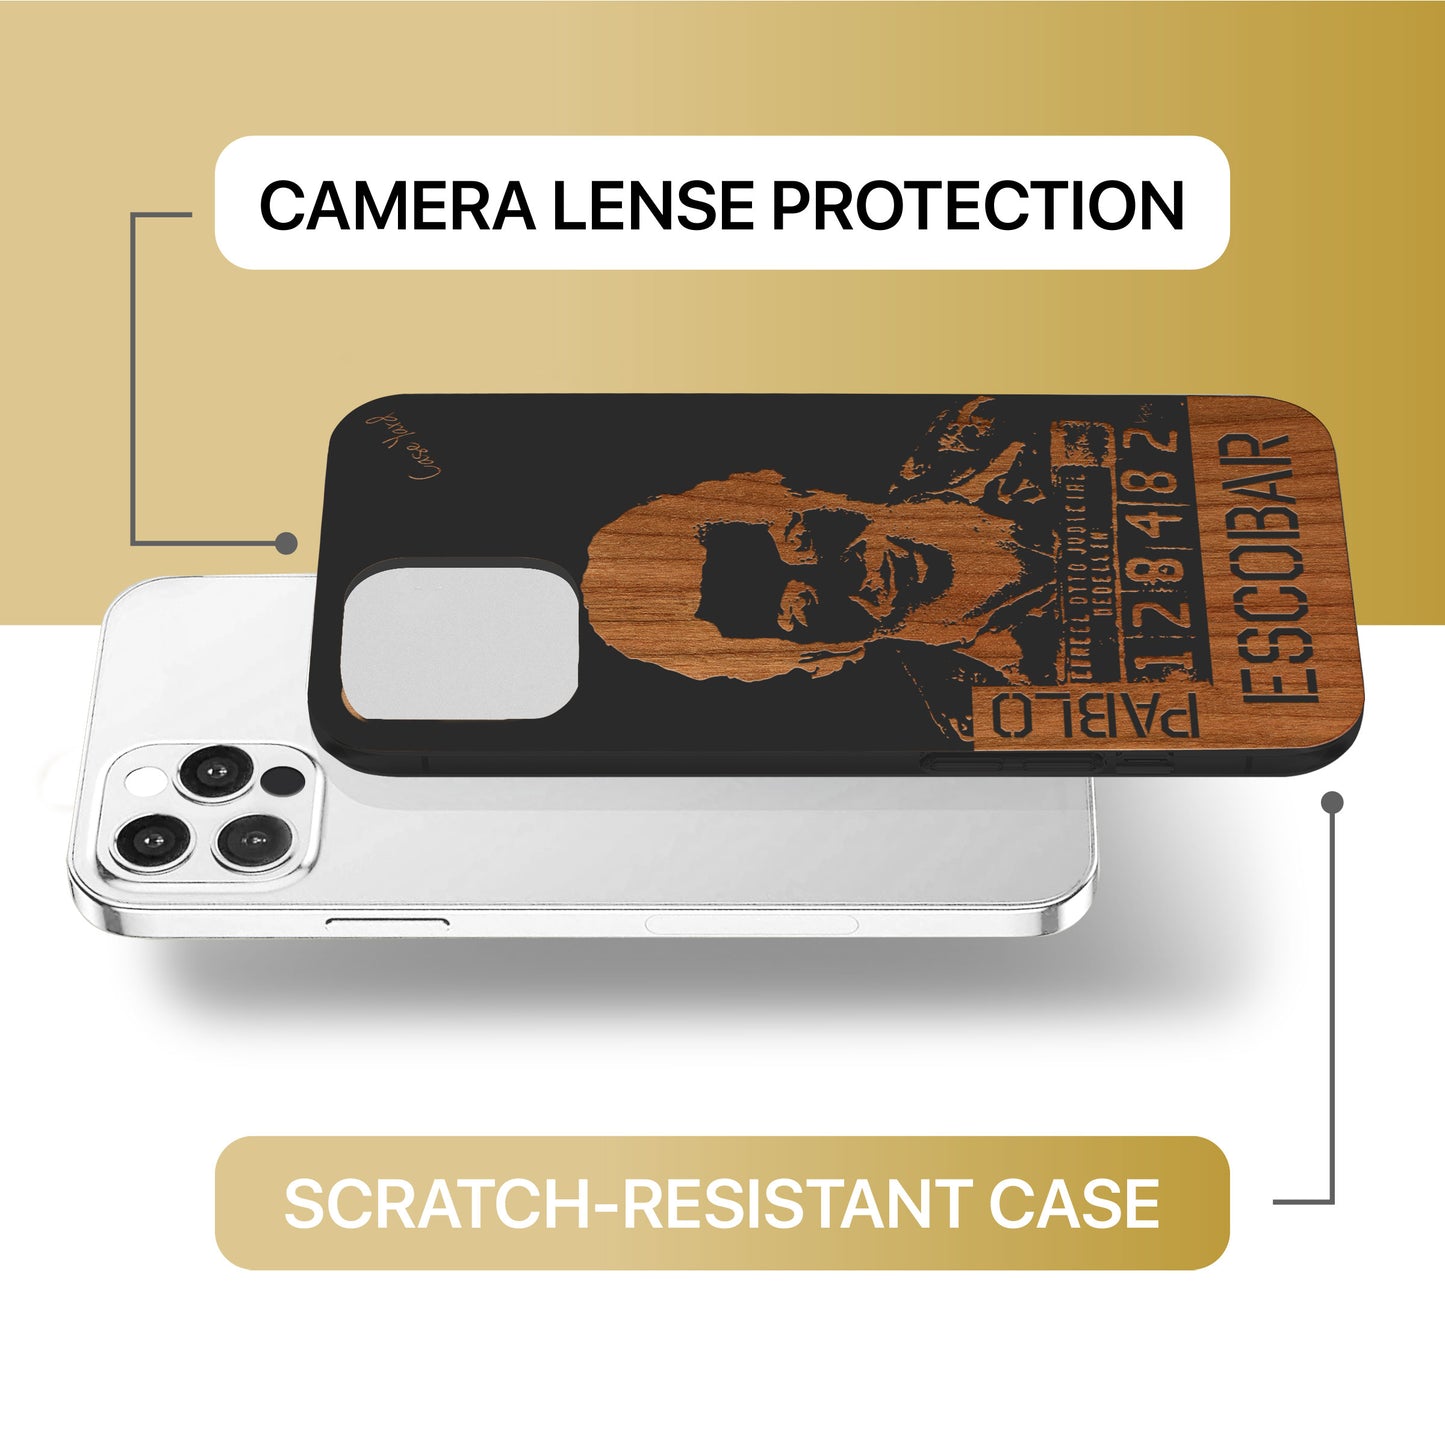 Wooden Cell Phone Case Cover, Laser Engraved case for iPhone & Samsung phone Pablo Escobar Mugshot Design